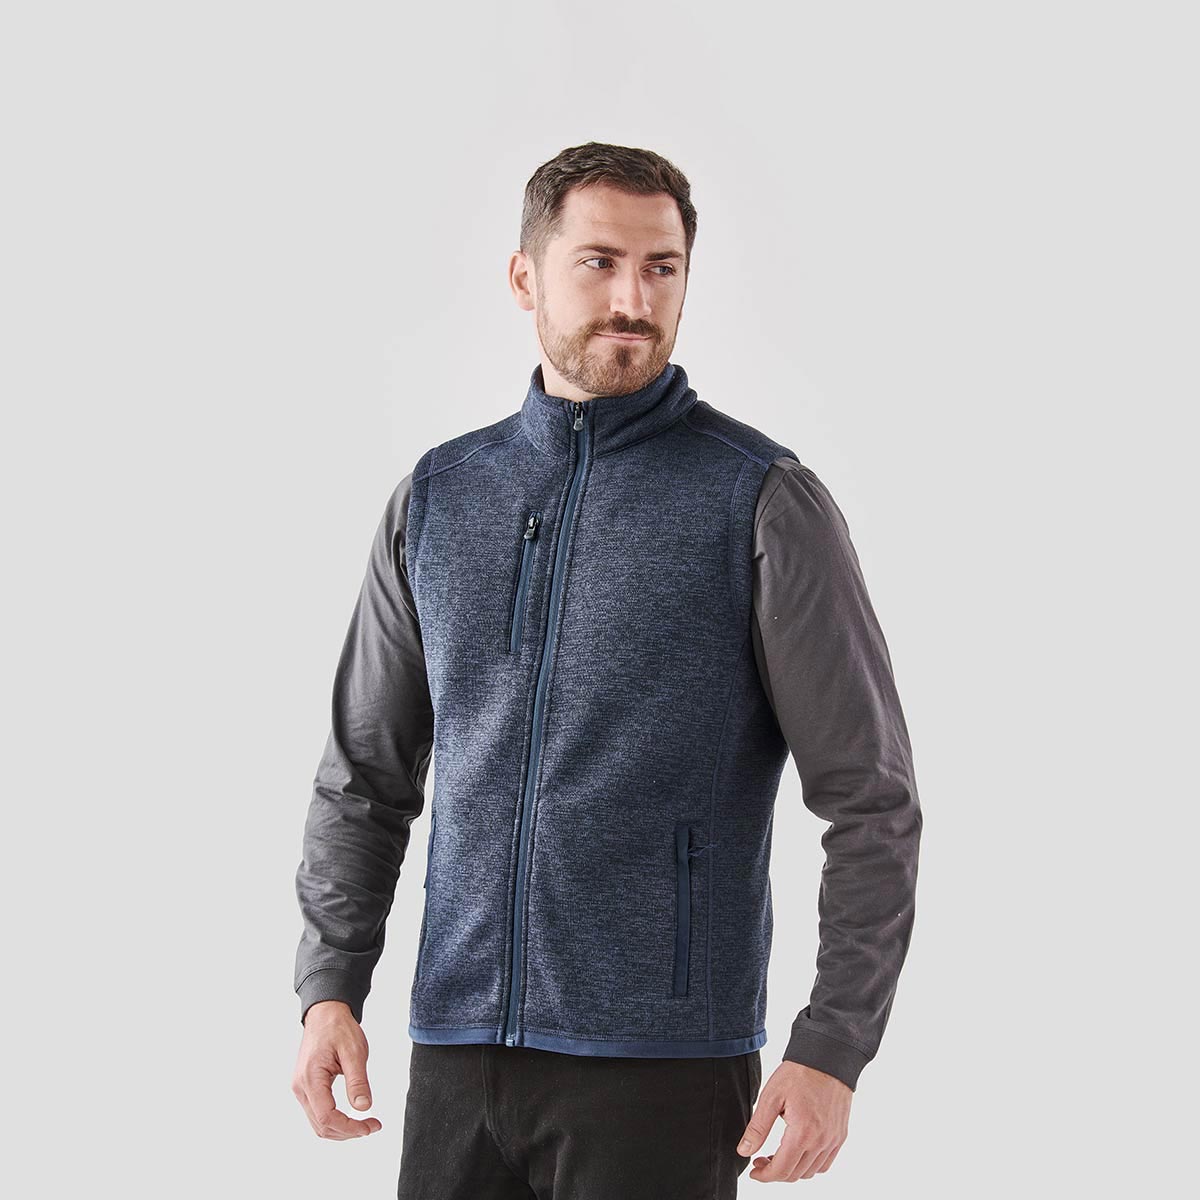 Tech Fleece Jackets & Vests.